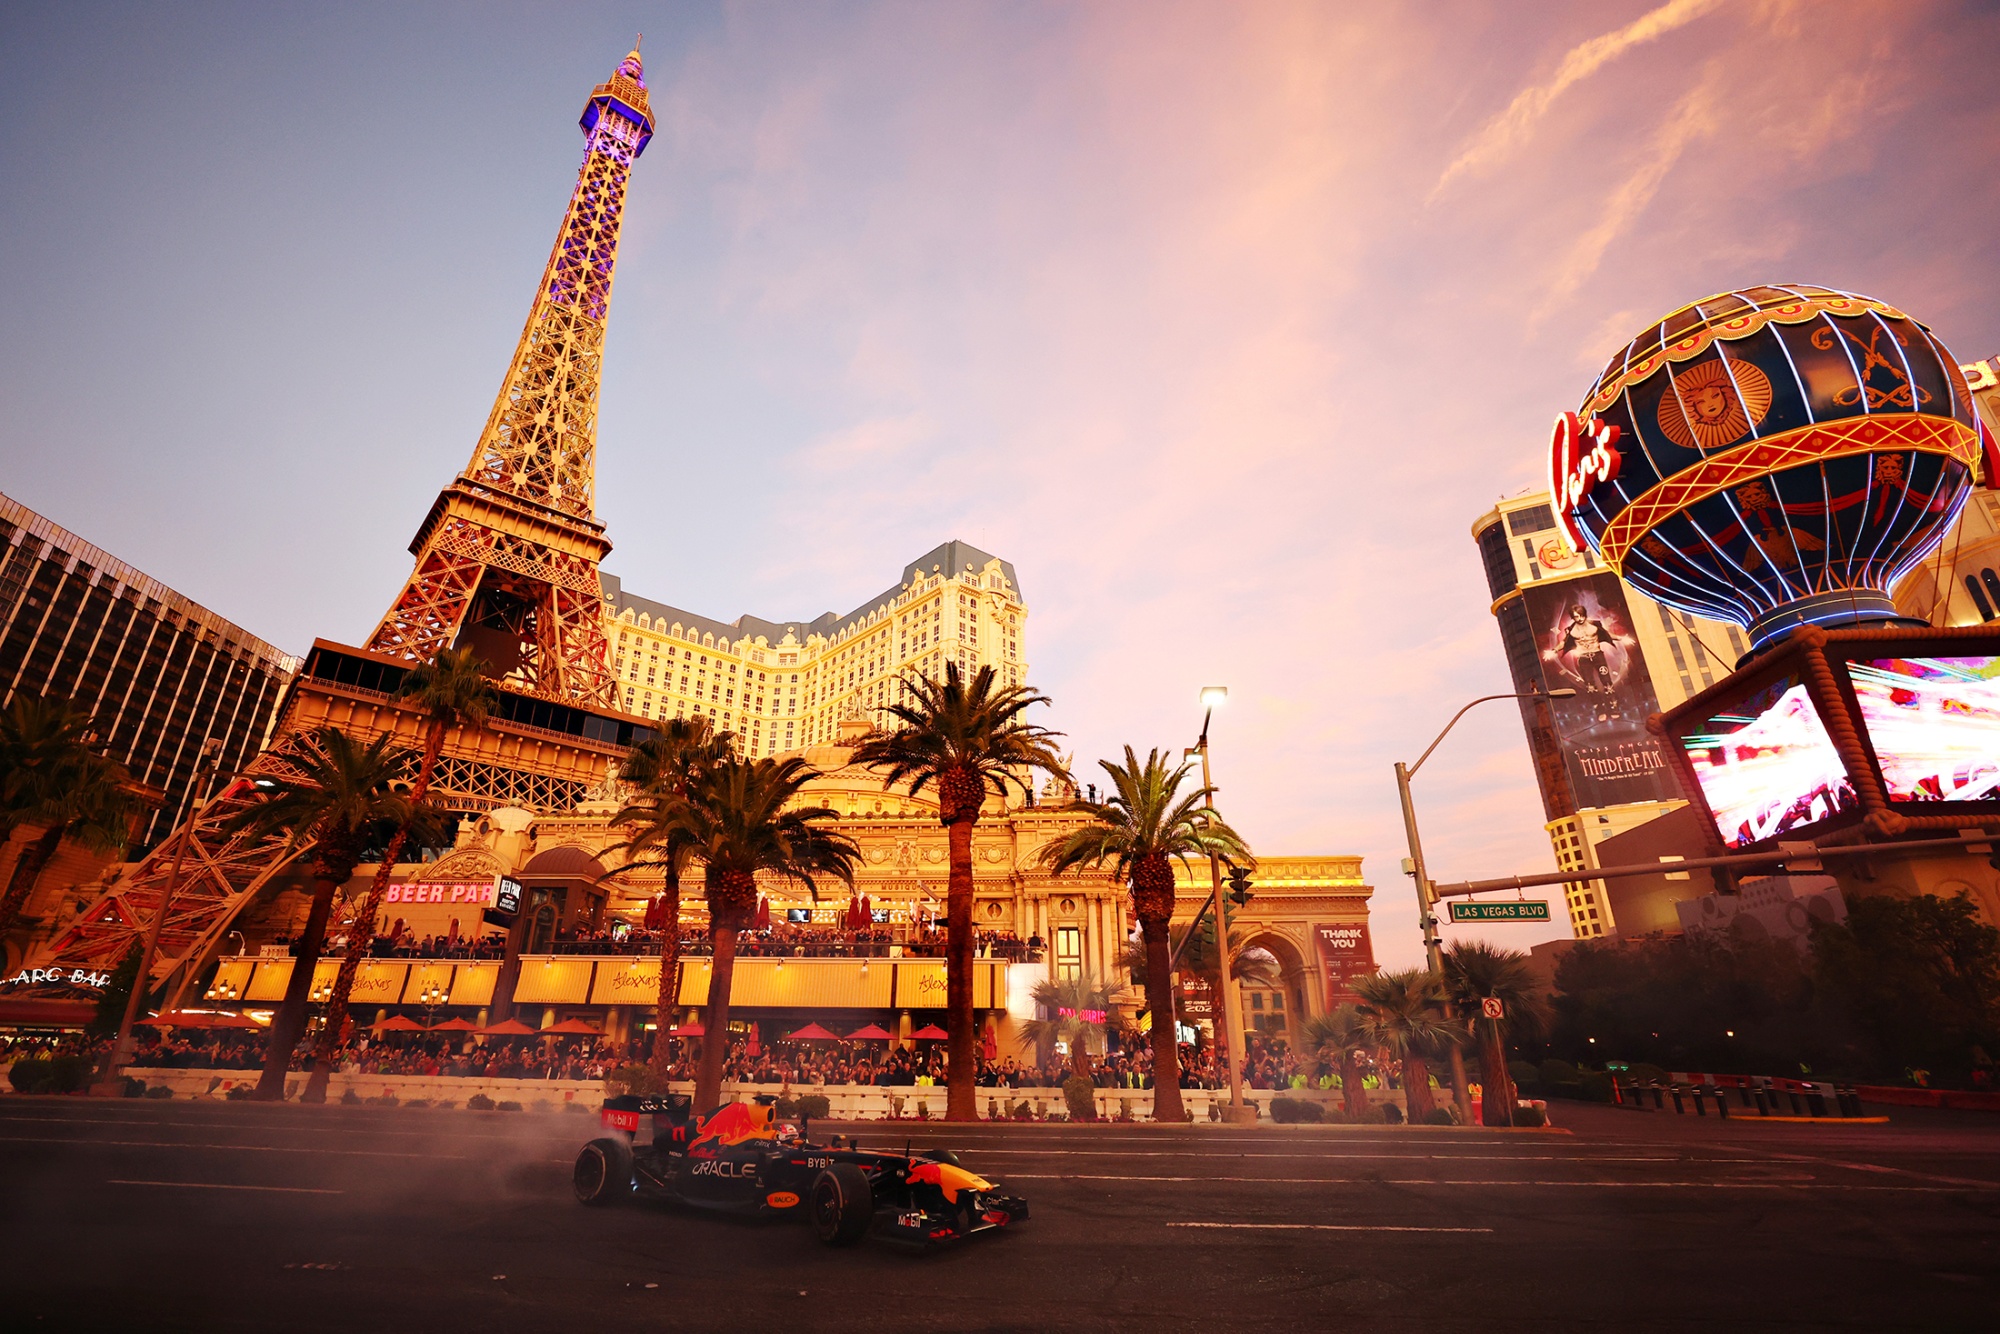 Eiffel Tower Viewing Deck Admission at Paris Las Vegas Hotel 2023